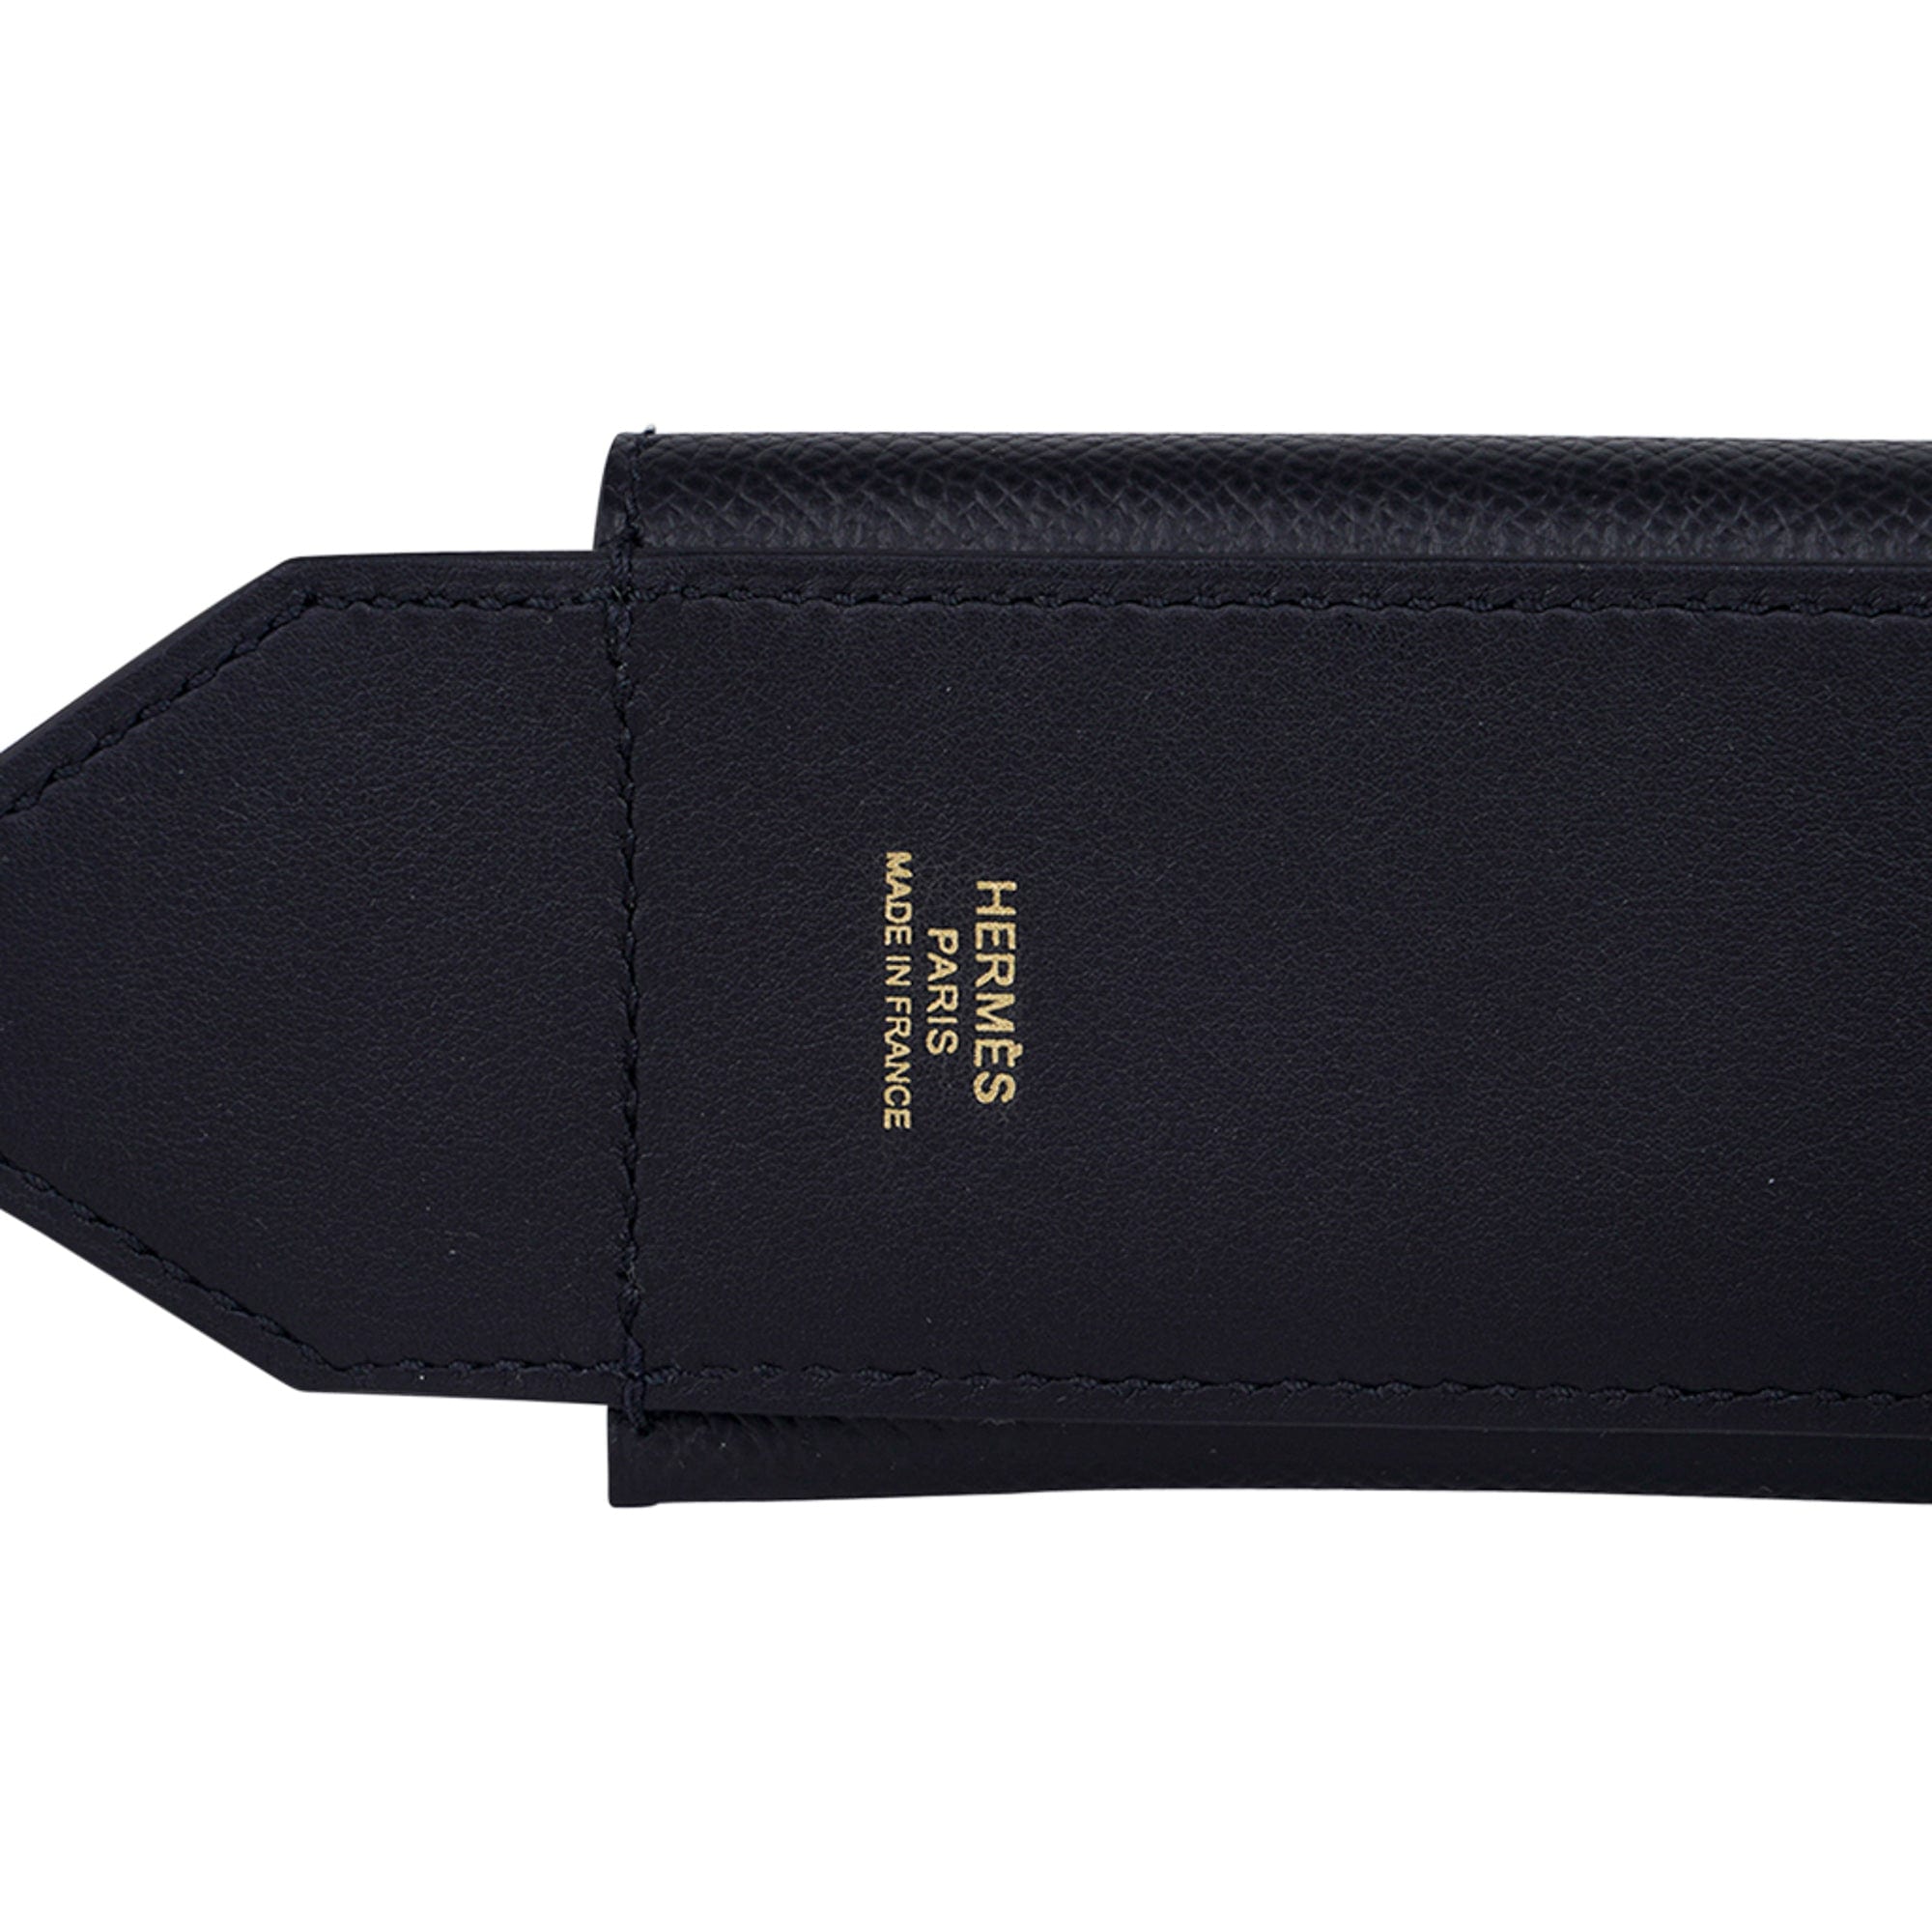 Hermes Bag Strap Kelly Pocket Gold Palladium Hardware 85 cm – Mightychic